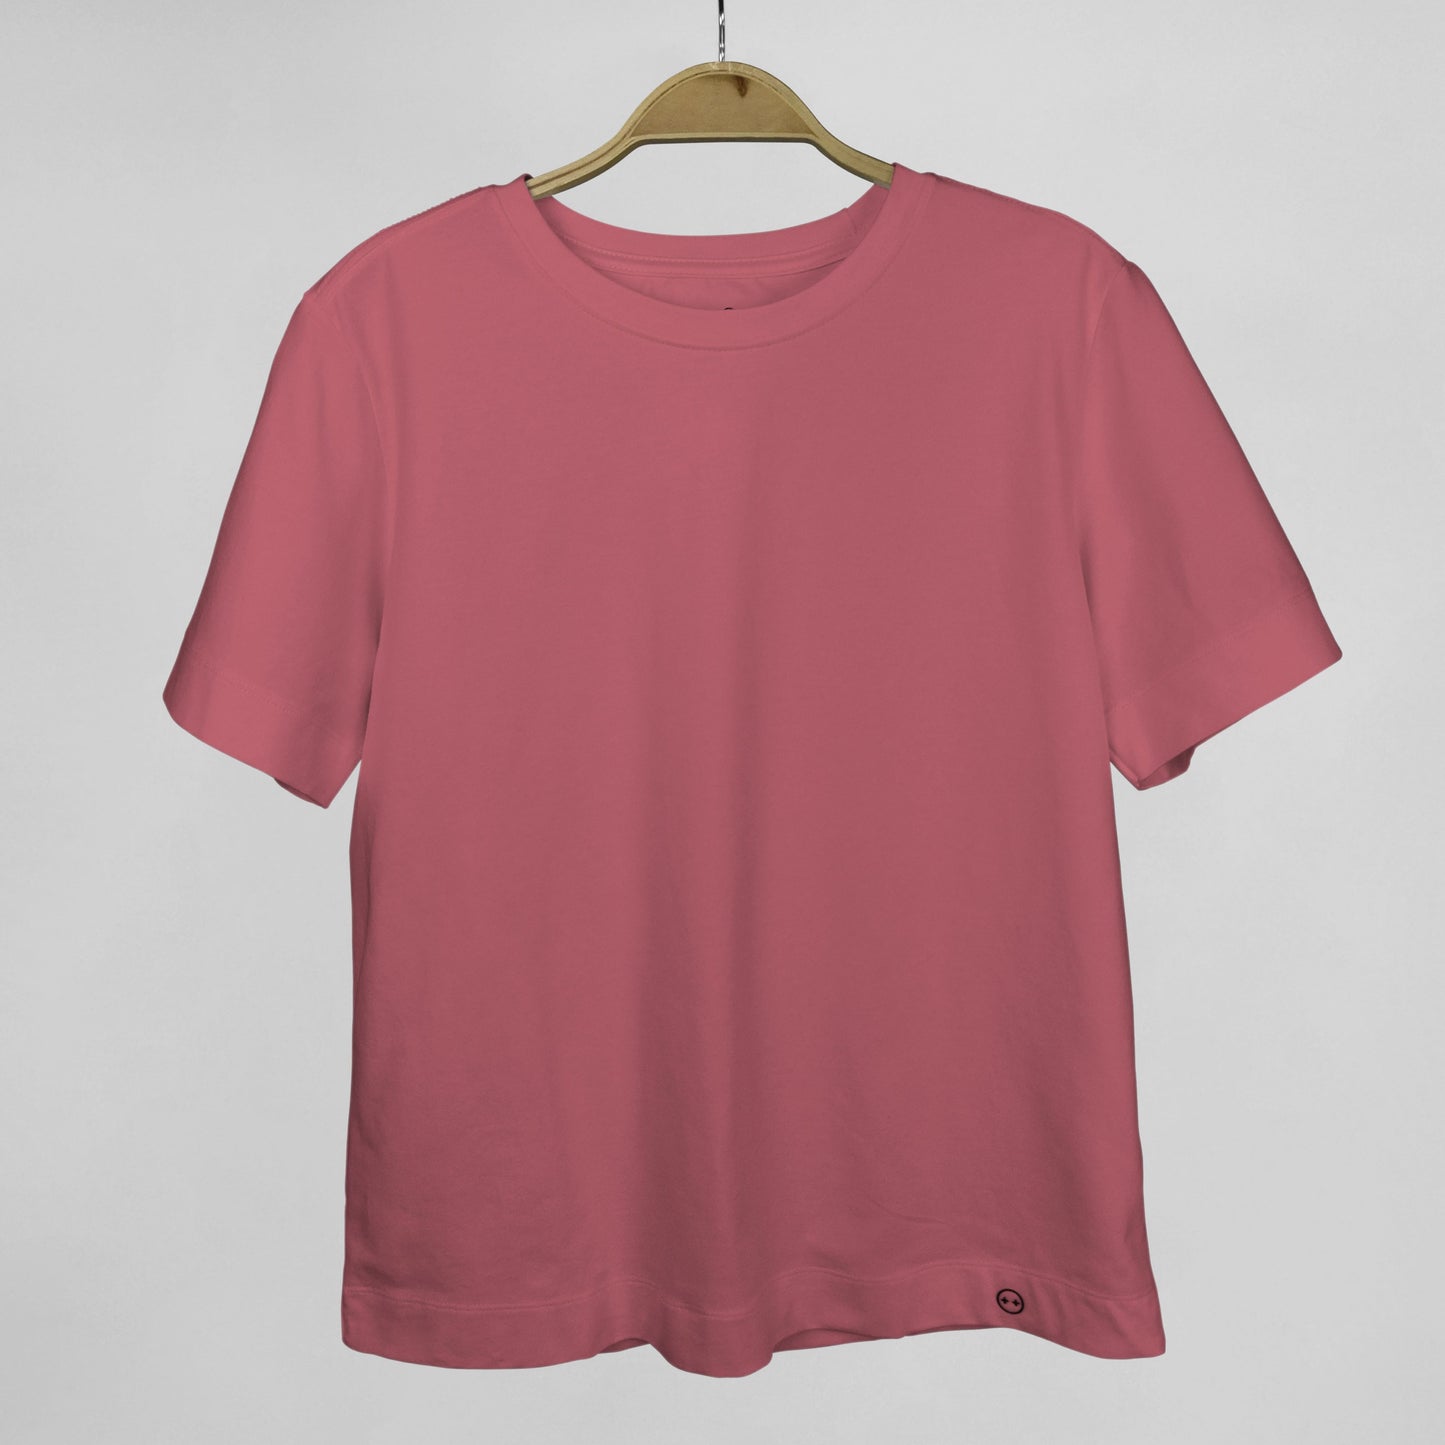 Camiseta manga corta cuello redondo color salmón (rosa)